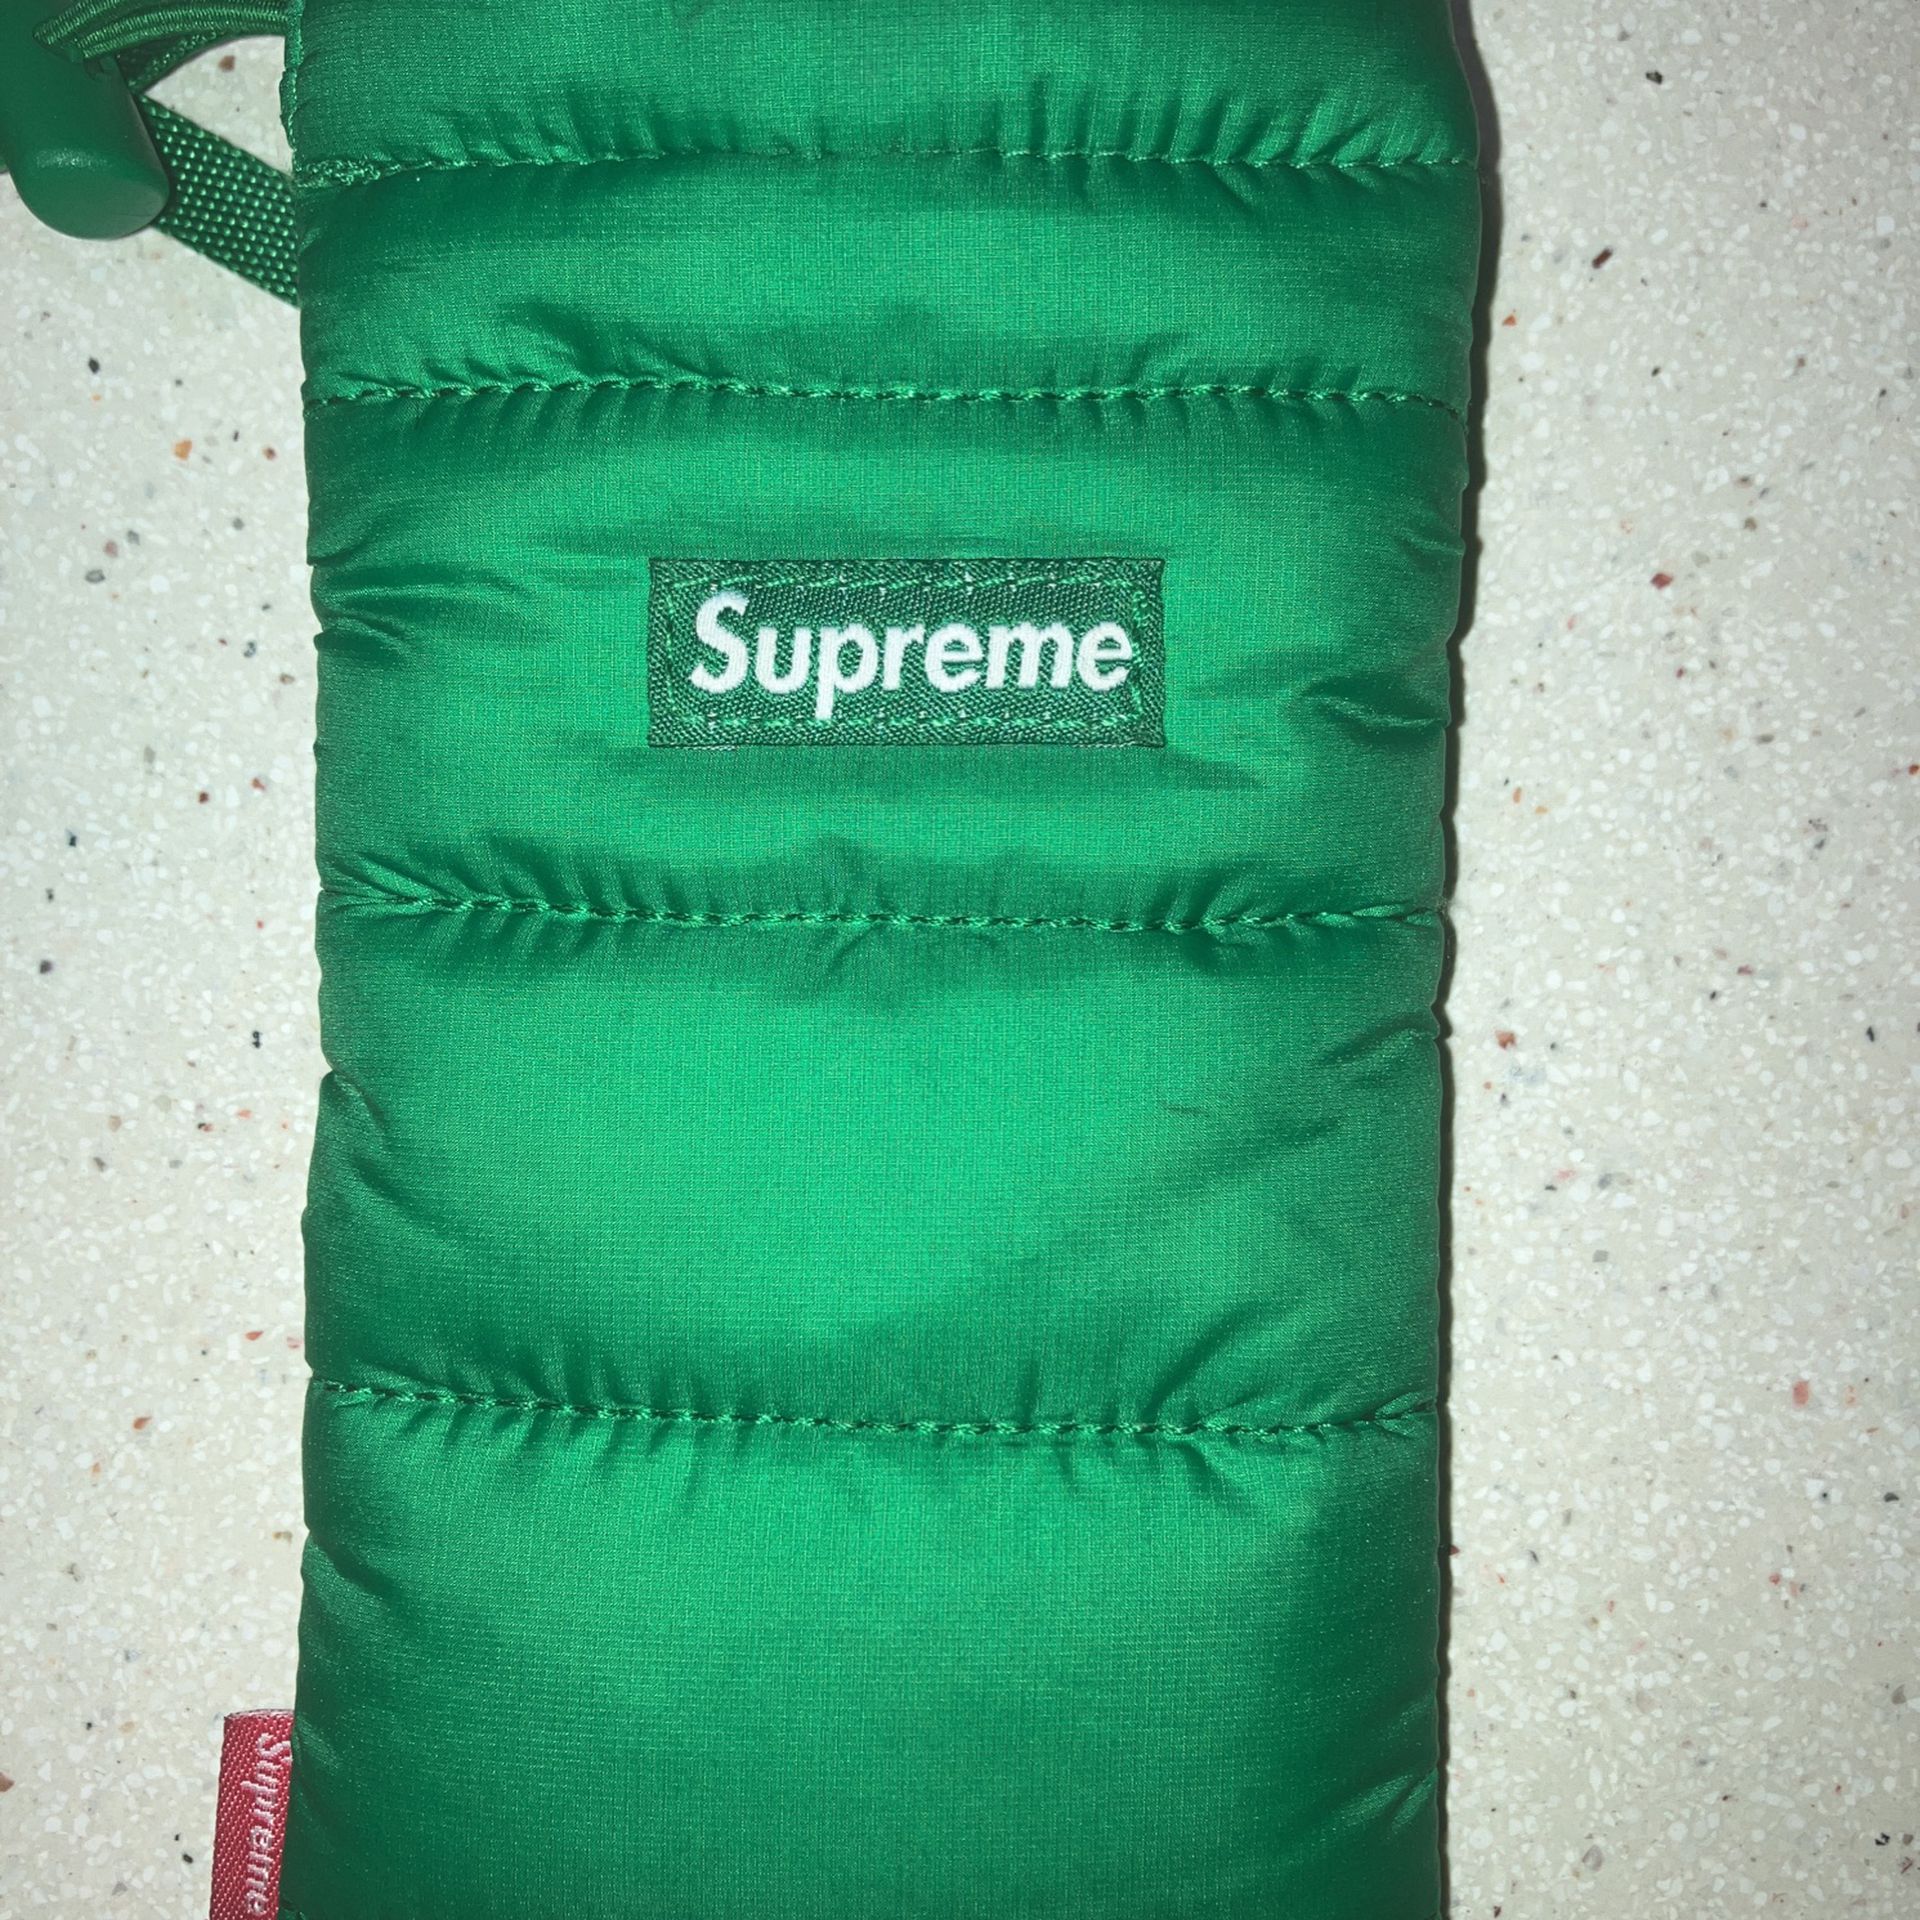 Supreme Keepall 45 Duffel bag for Sale in El Monte, CA - OfferUp